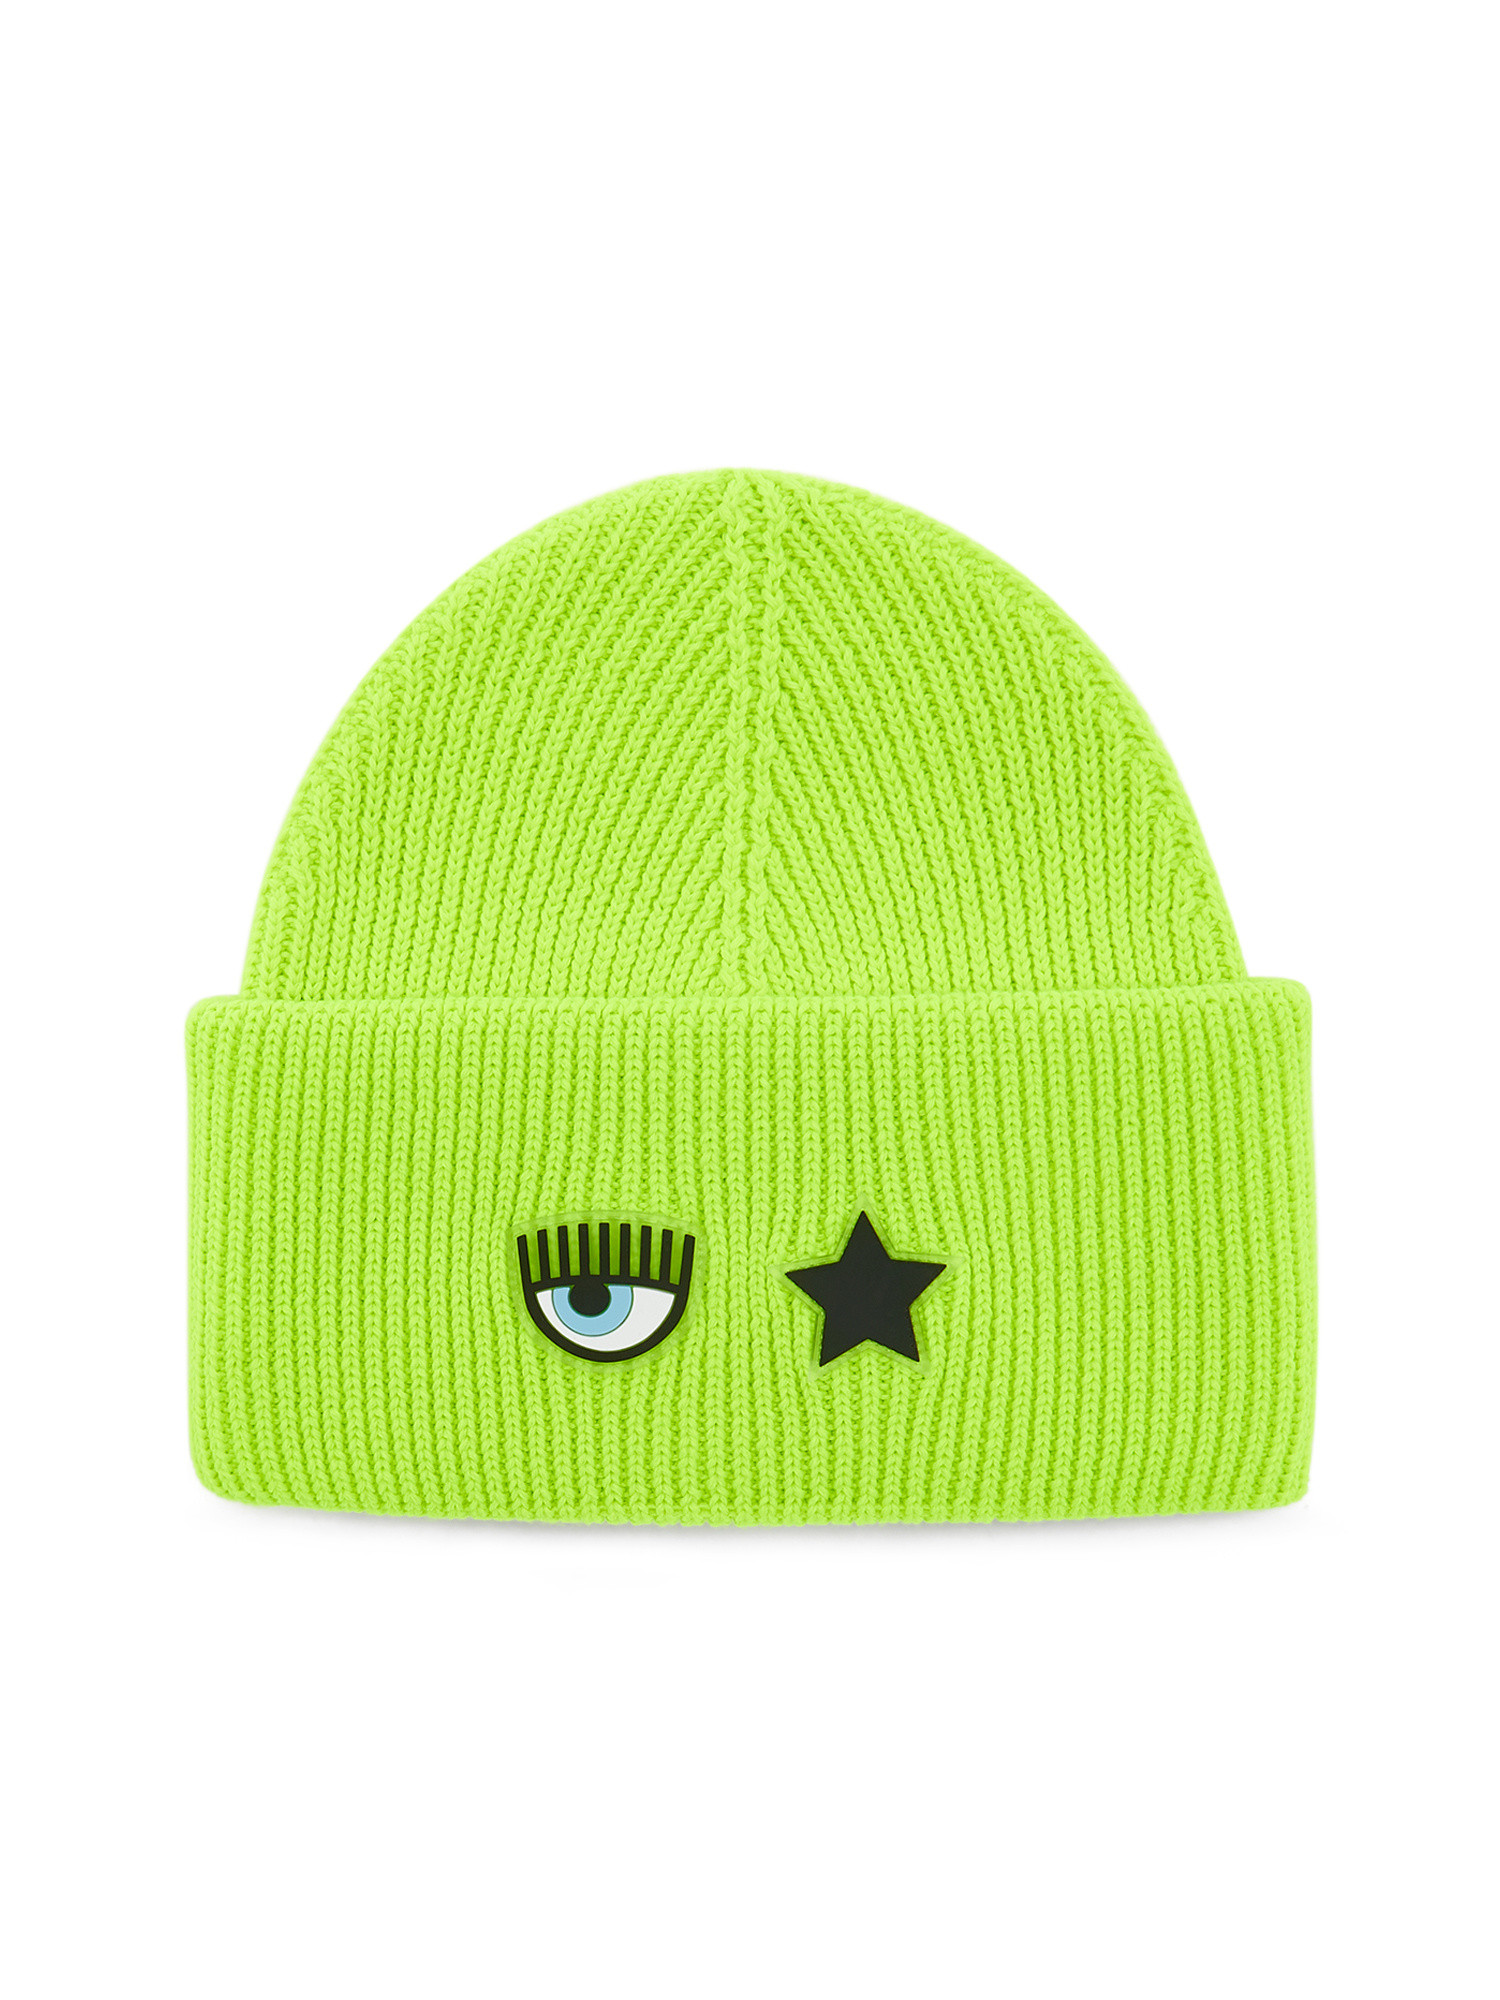 Chiara Ferragni - Beanie hat with Eye Star logo, Green, large image number 0